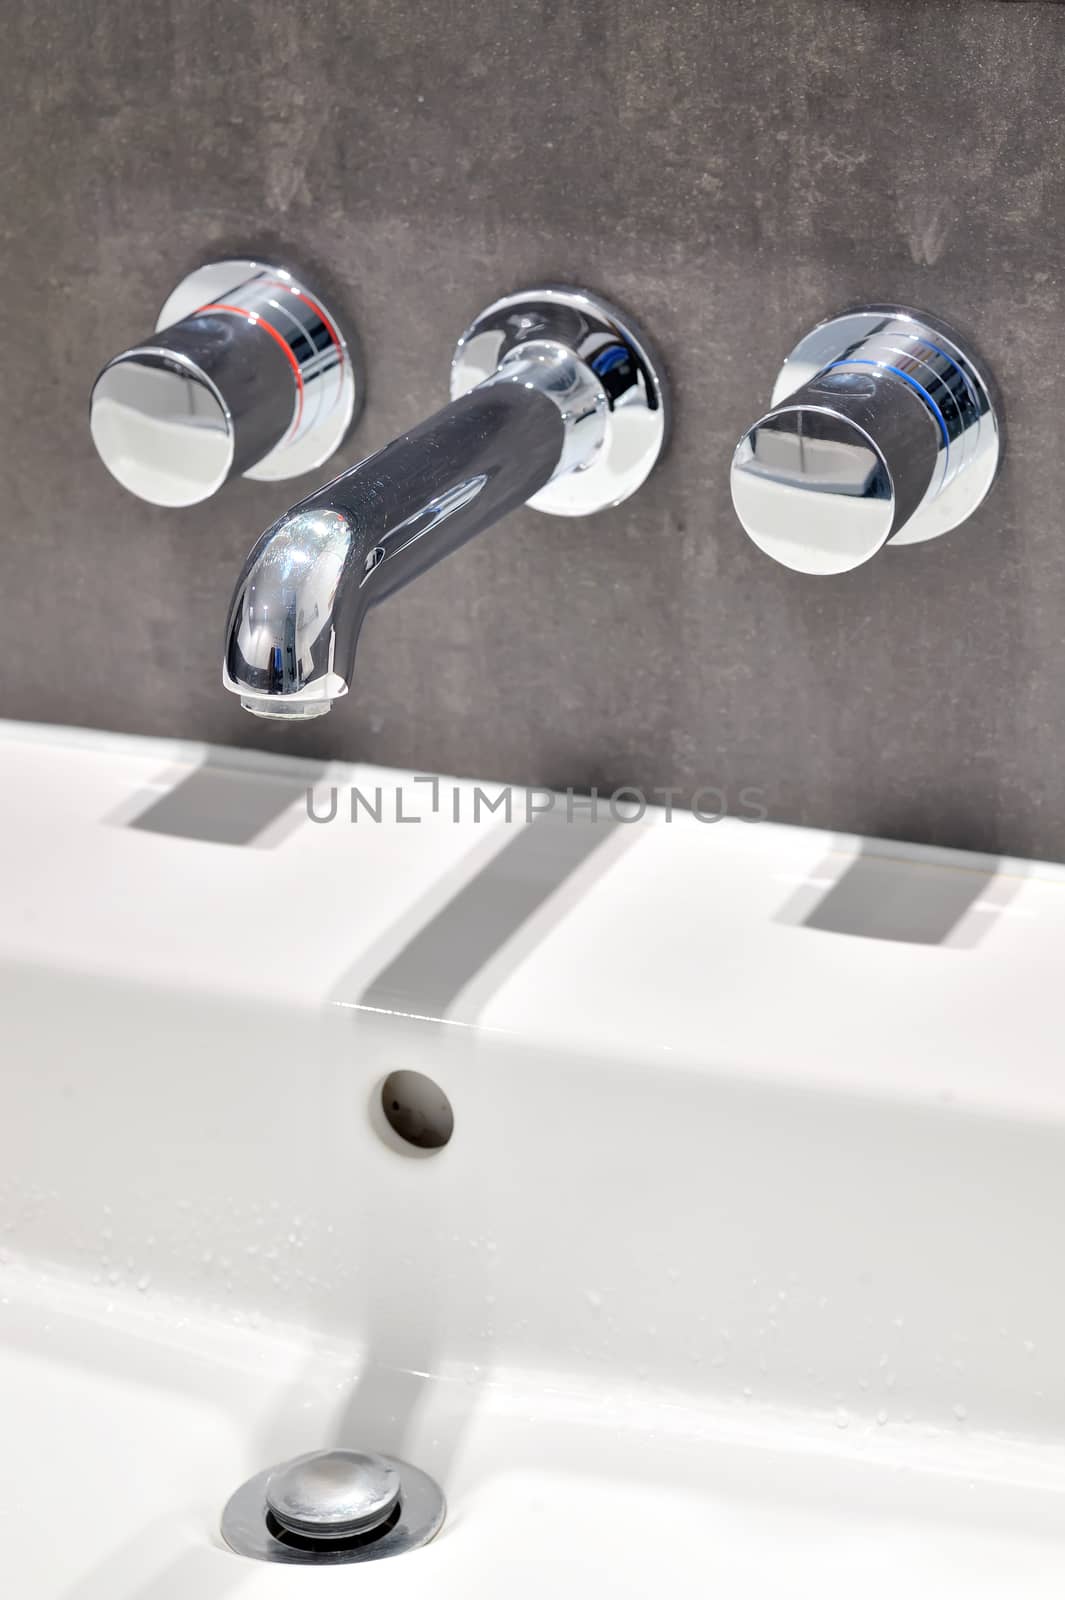 Details of modern bathroom taps